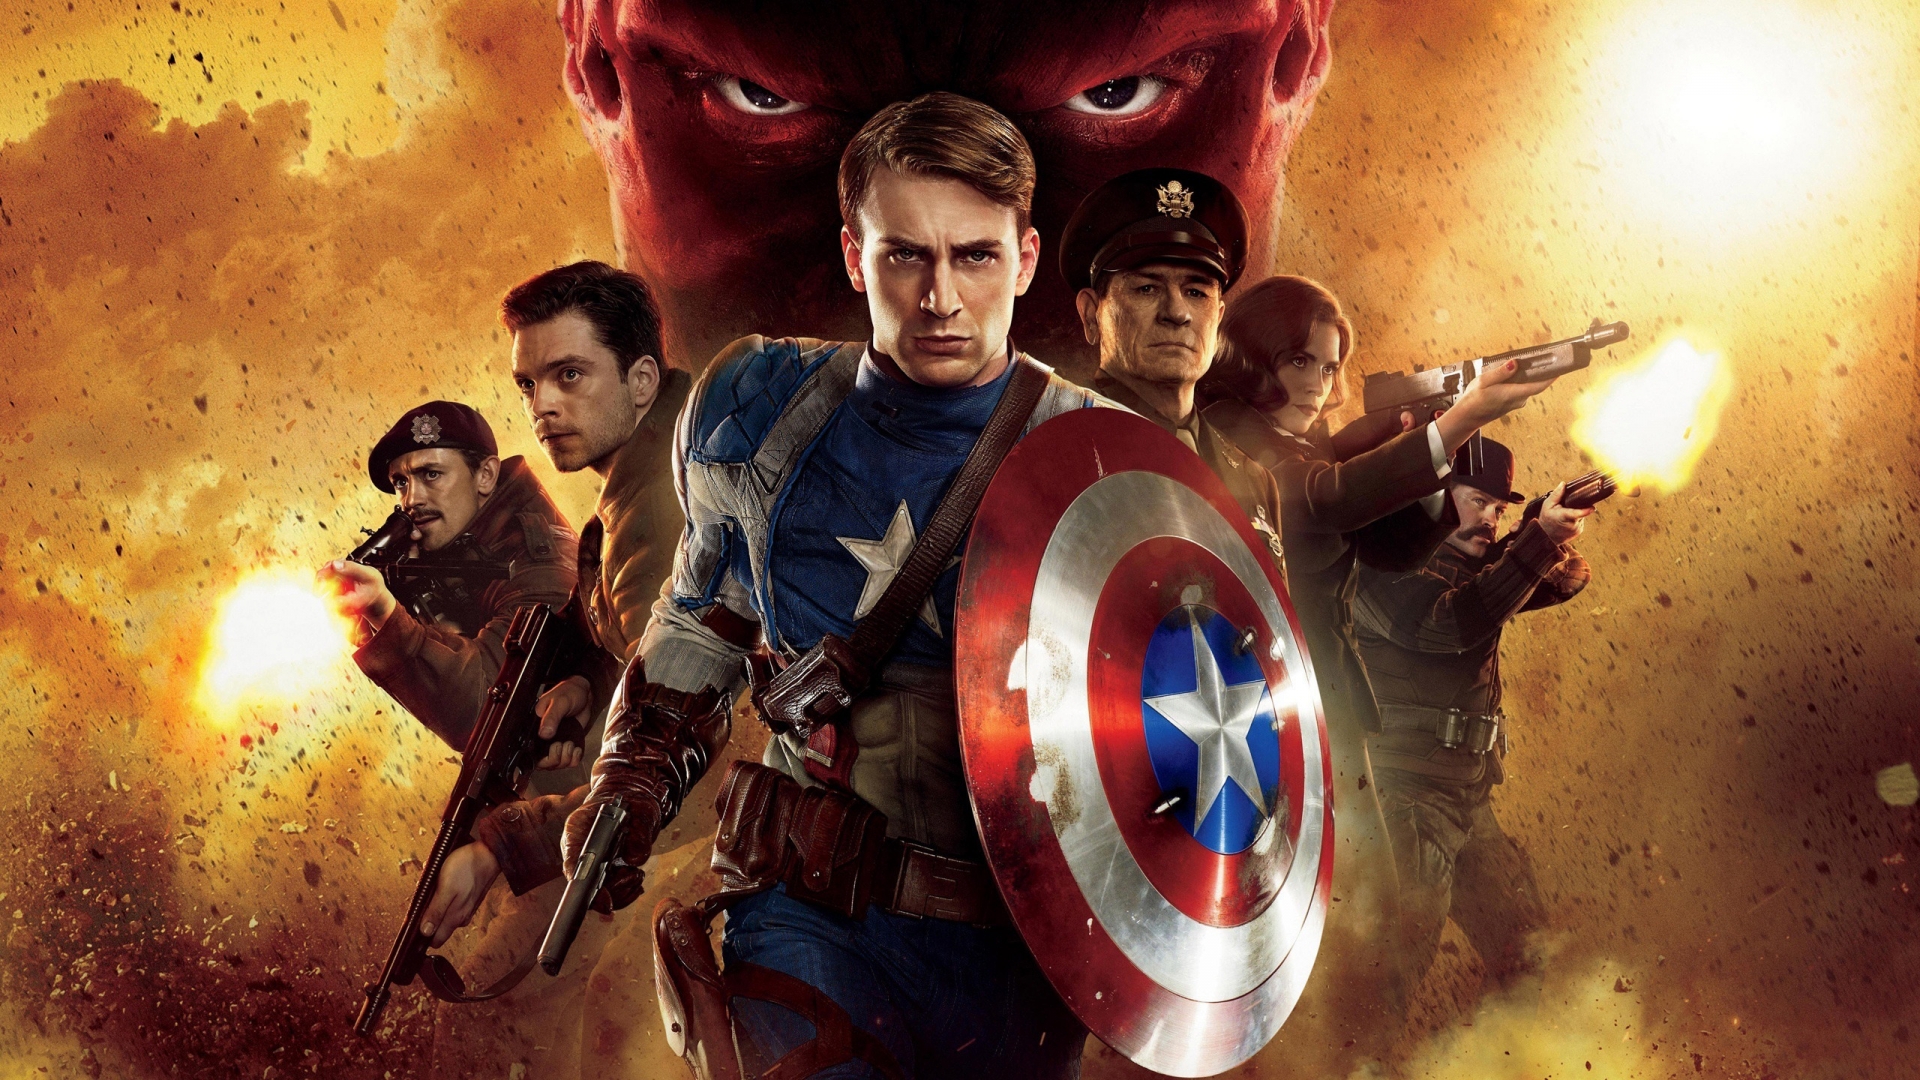 Captain America Movie for 1920 x 1080 HDTV 1080p resolution